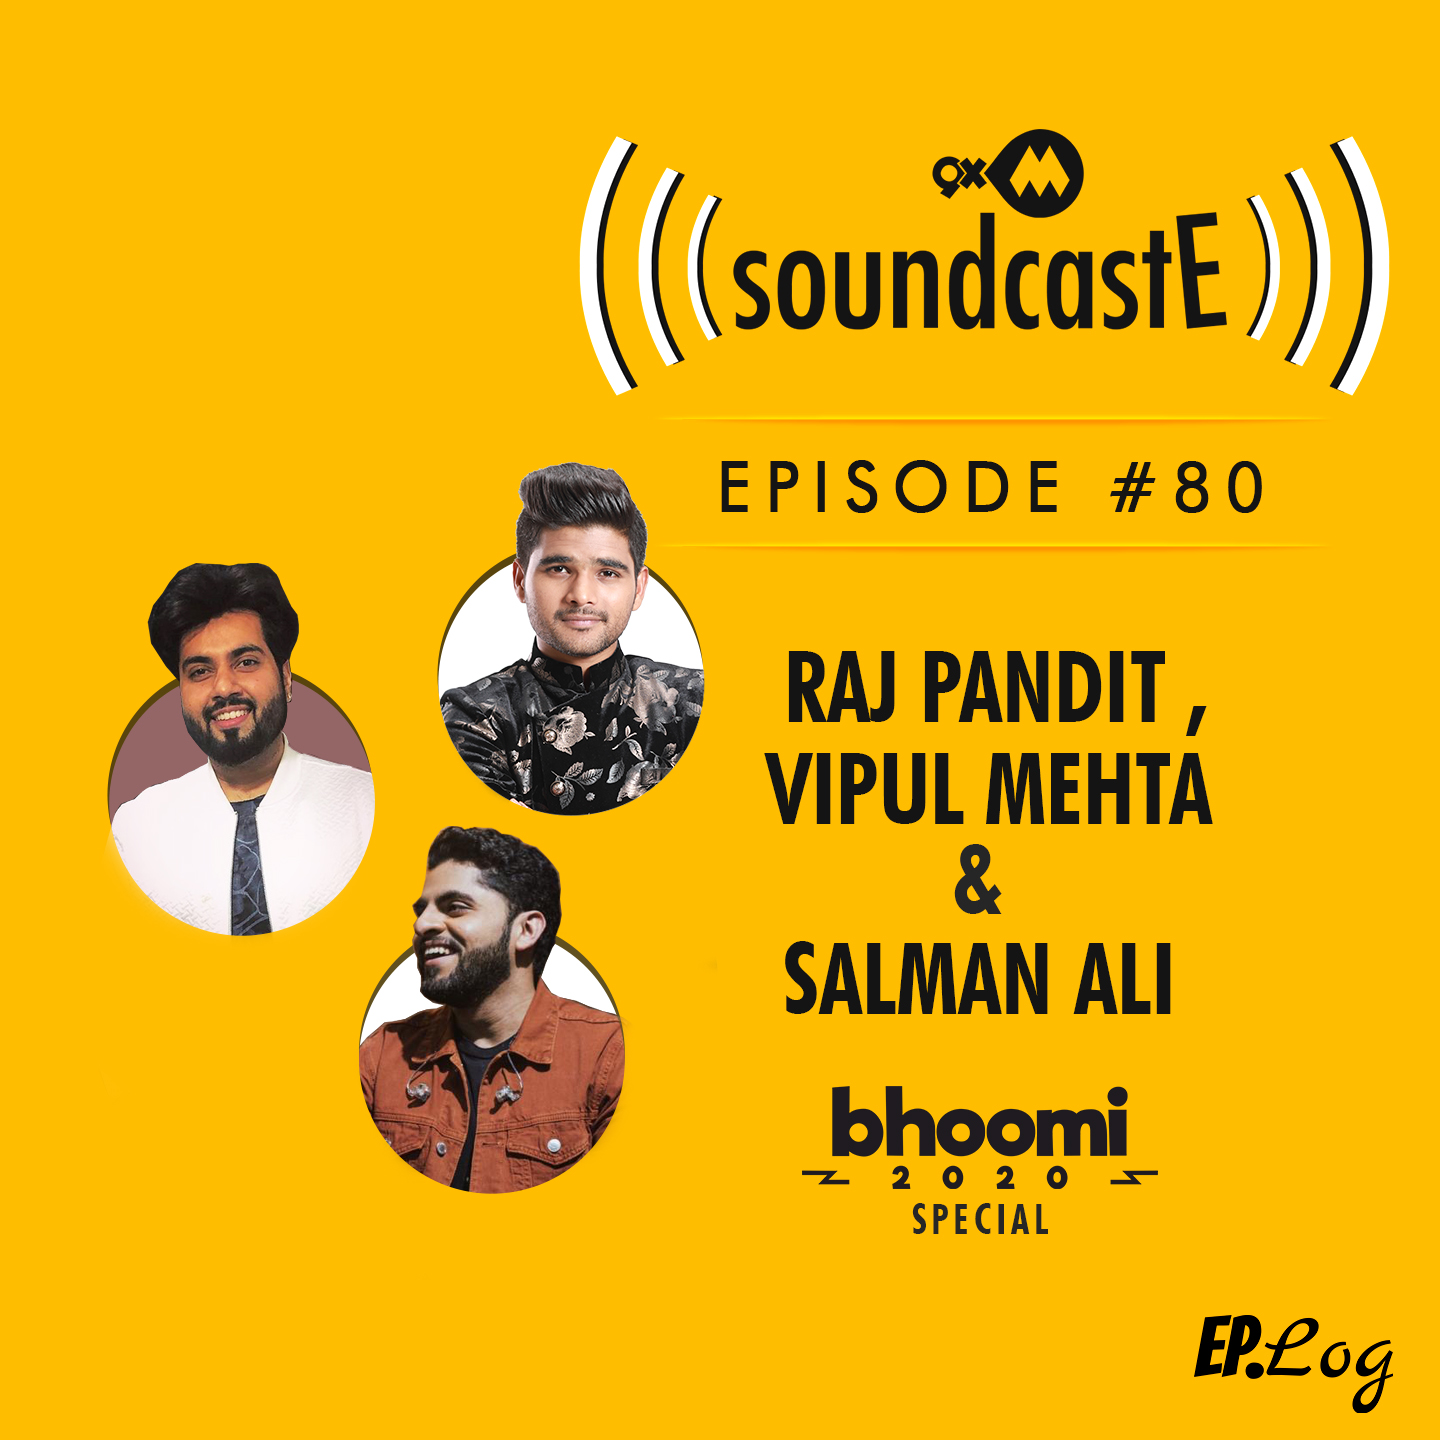 Ep.80: 9XM SoundcastE ft. Raj Pandit, Vipul Mehta and Salman Ali Bhoomi 2020 Special